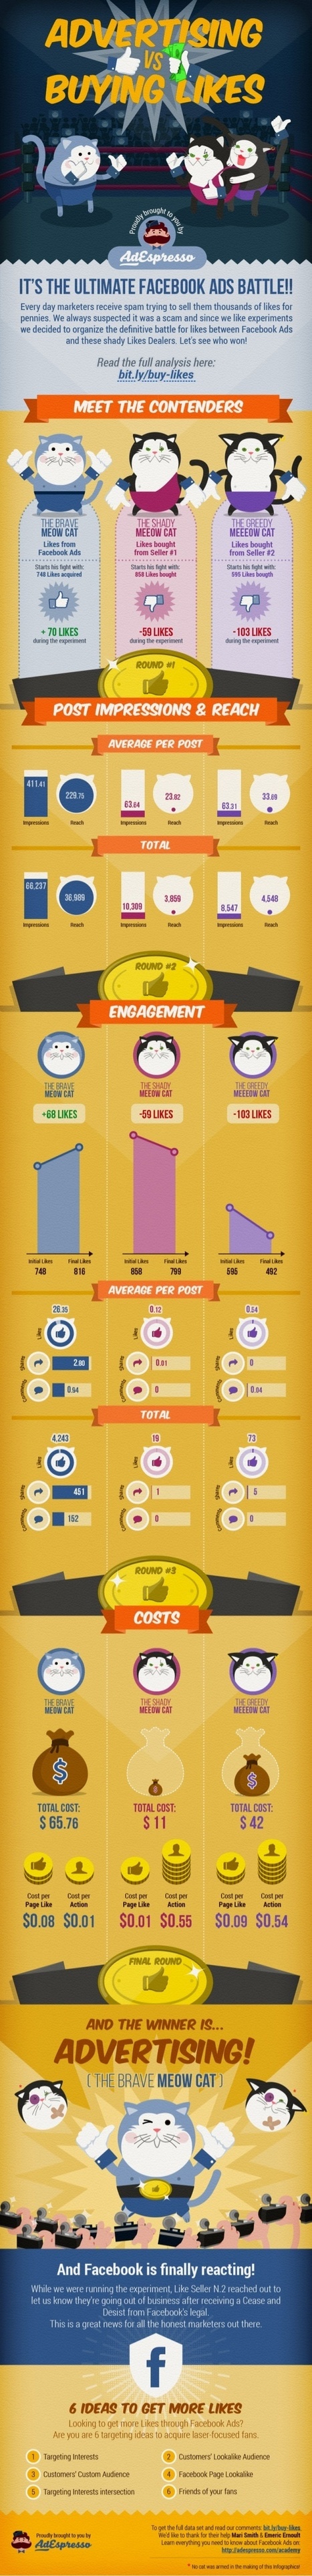 Publicidad vs comprar "Me Gusta" #infografia #infographic #socialmedia #marketing | Seo, Social Media Marketing | Scoop.it